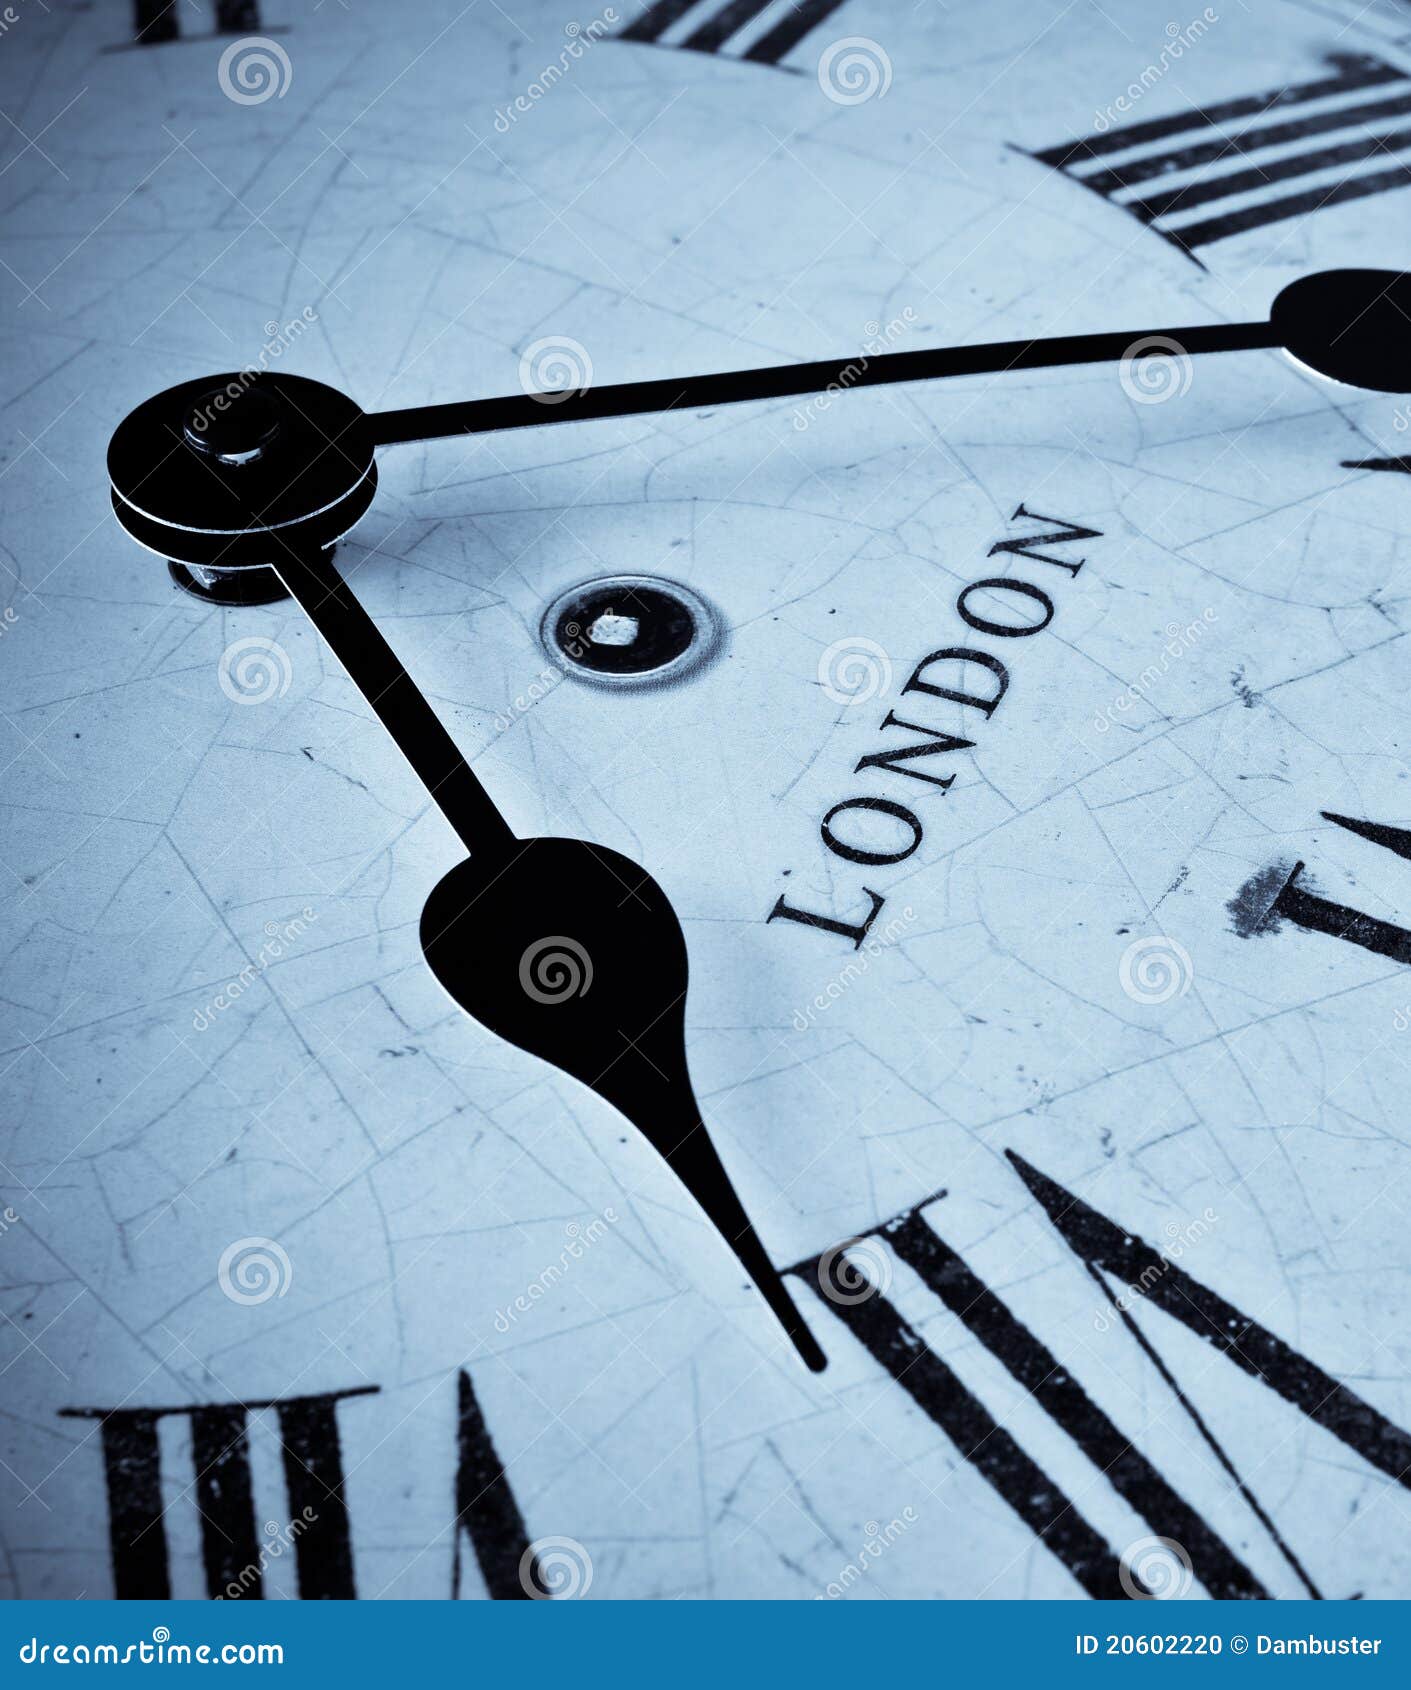 London stock photo. Image of capital, dial, finance, measurement - 20602220